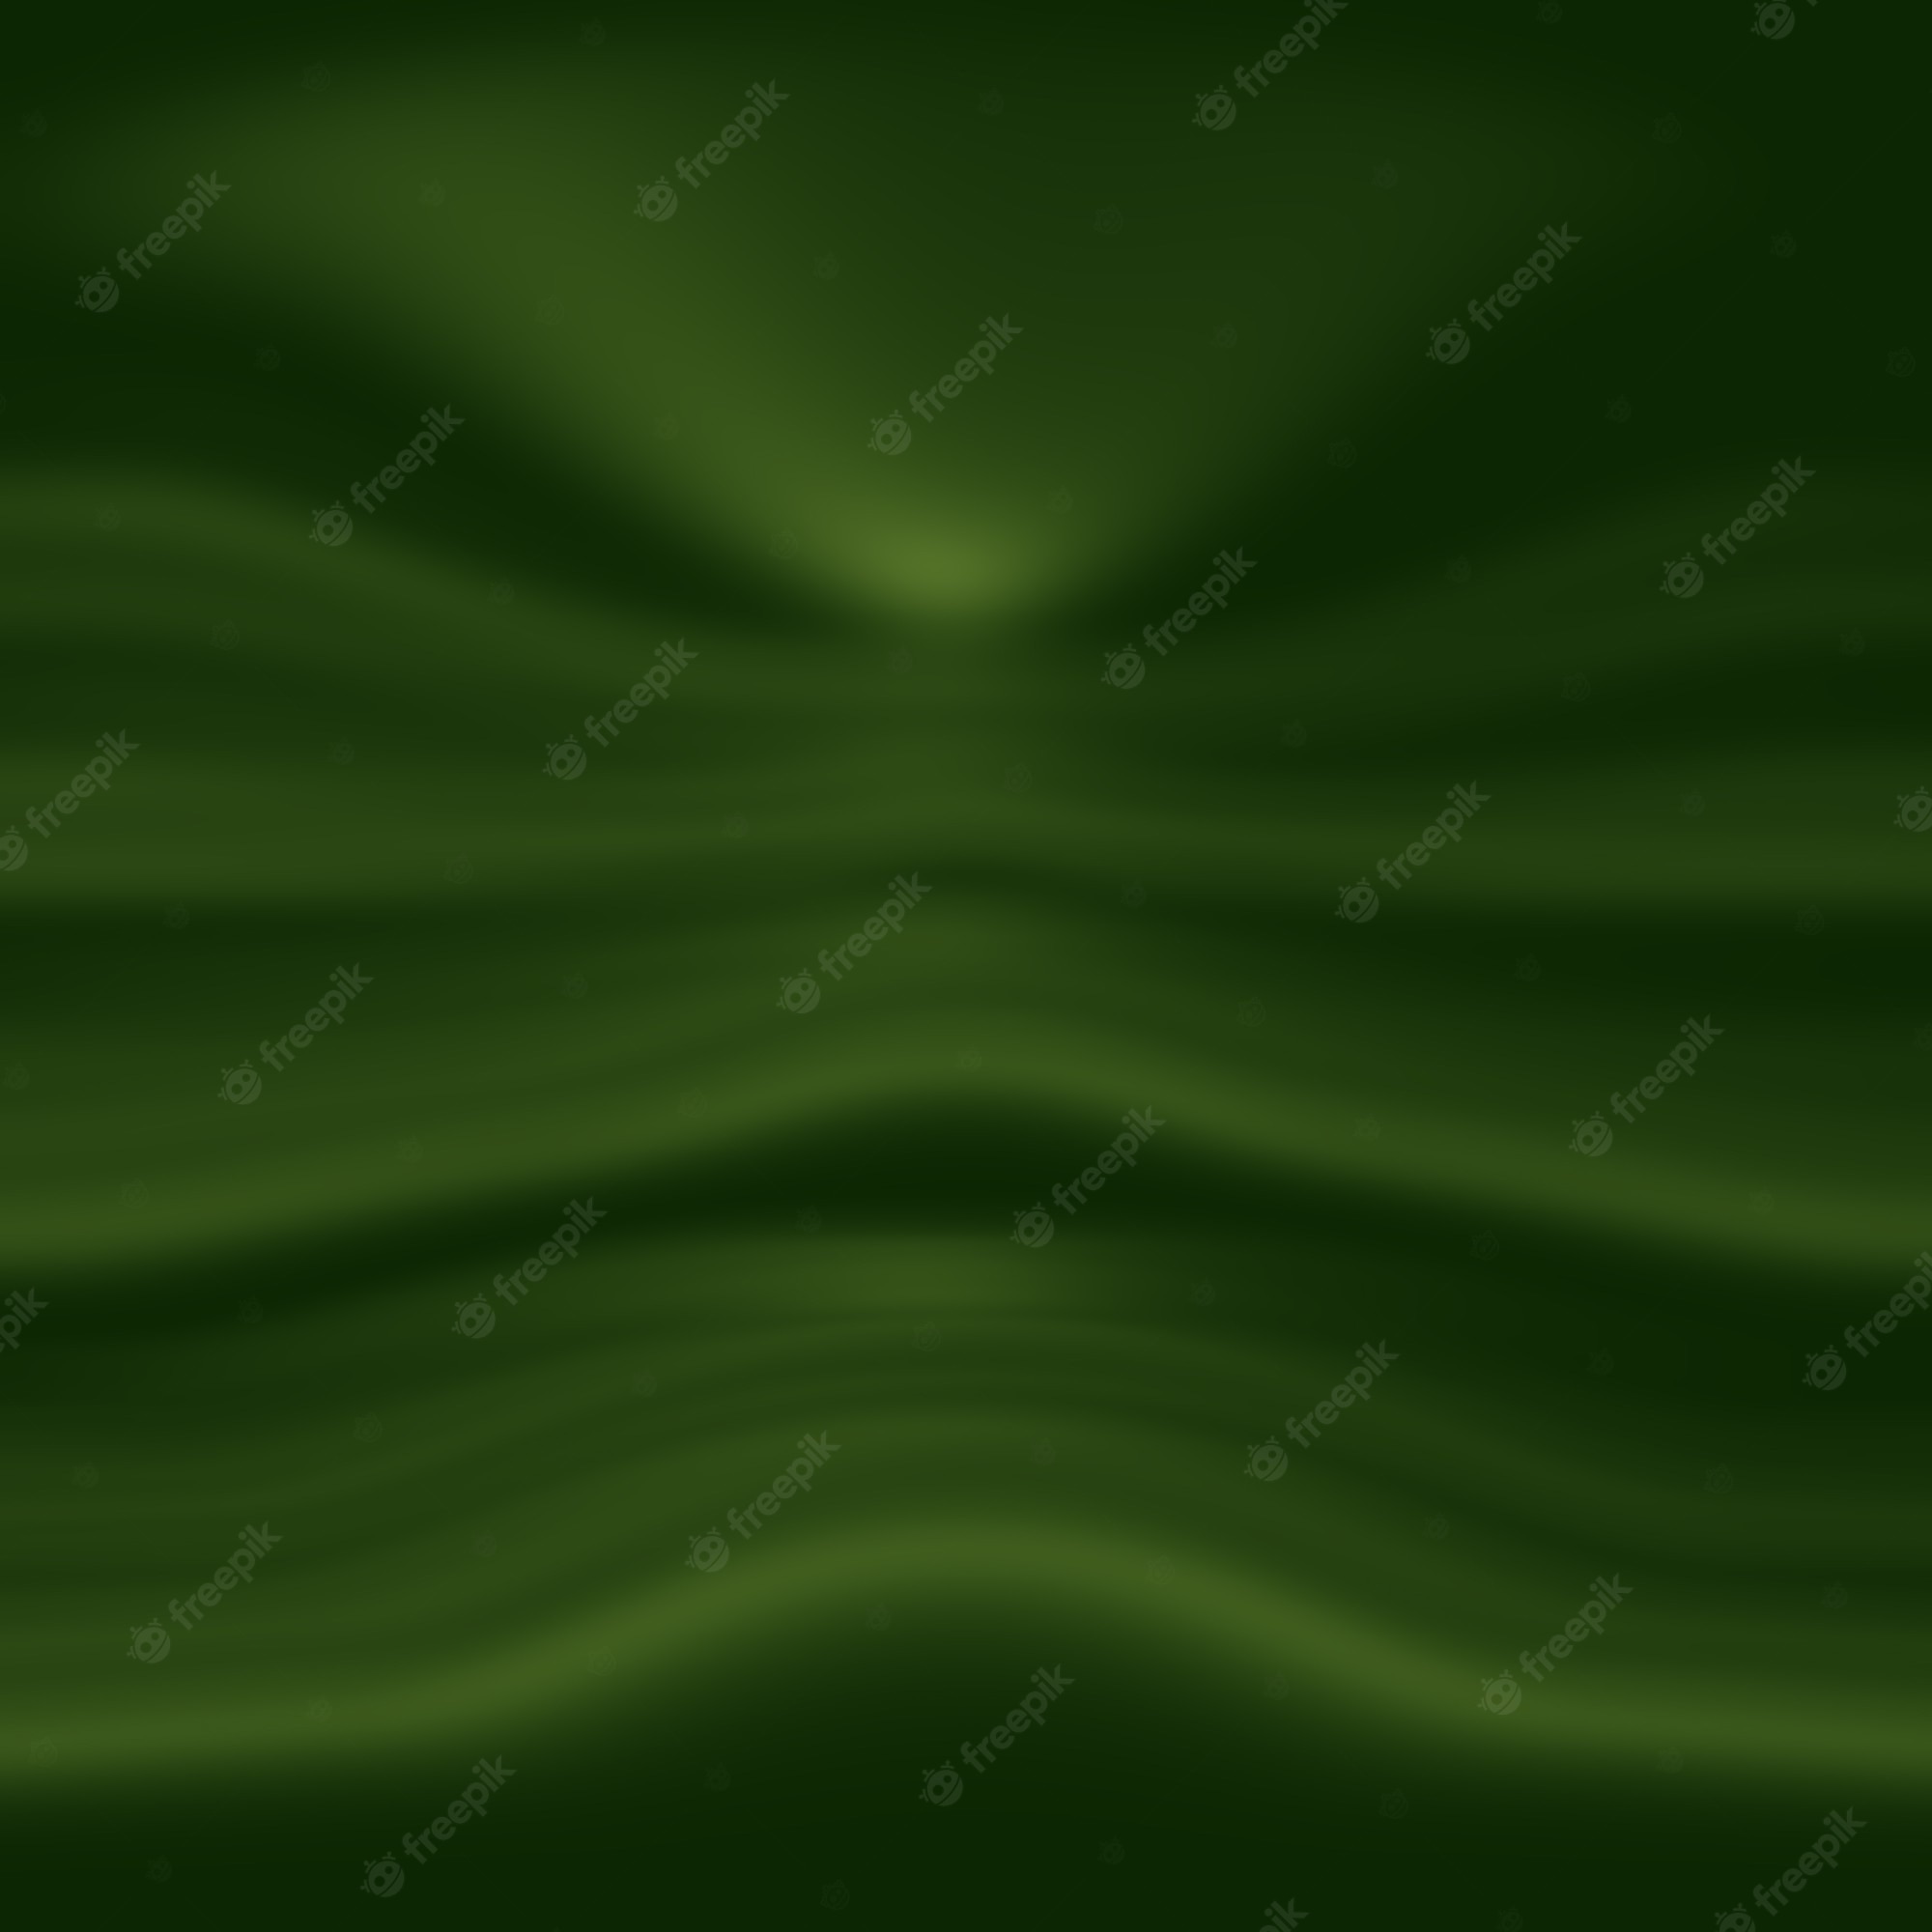 Dark Green Gradient Image